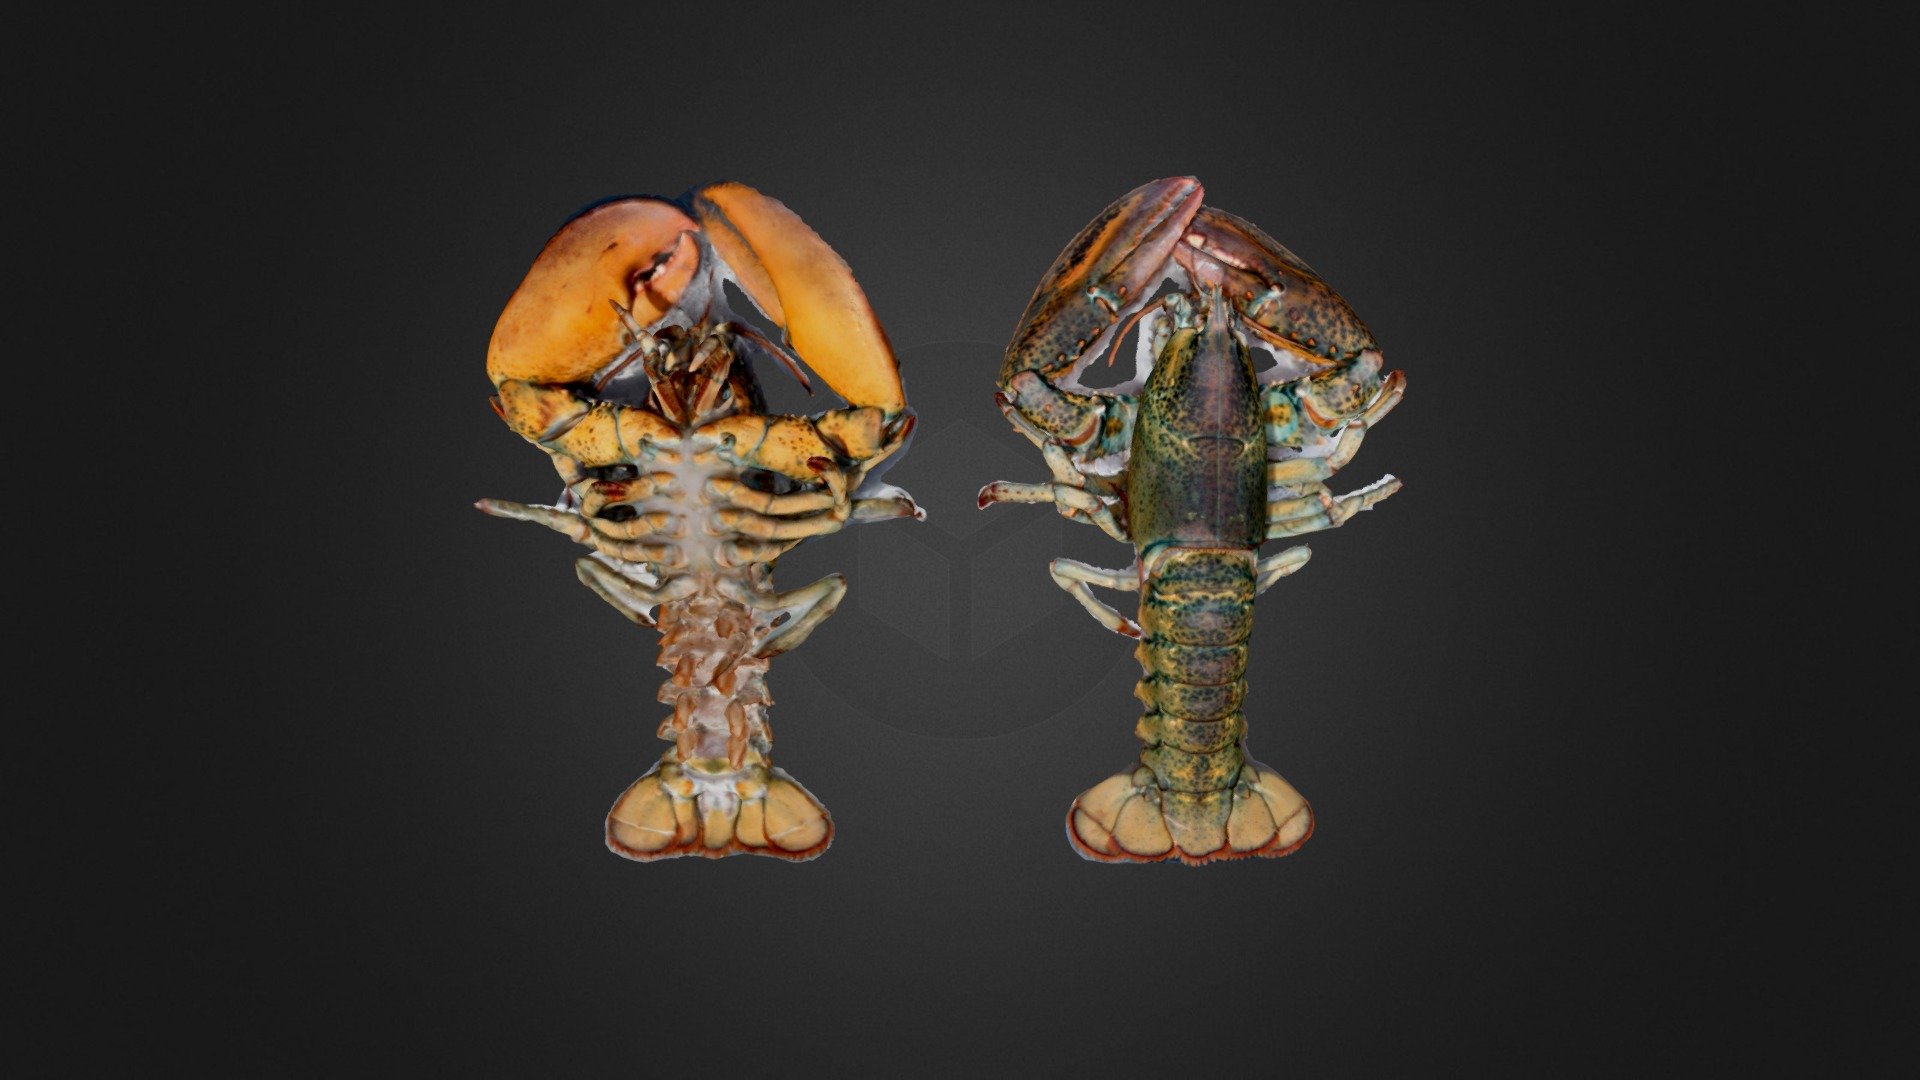 Crustacean: Modern lobster